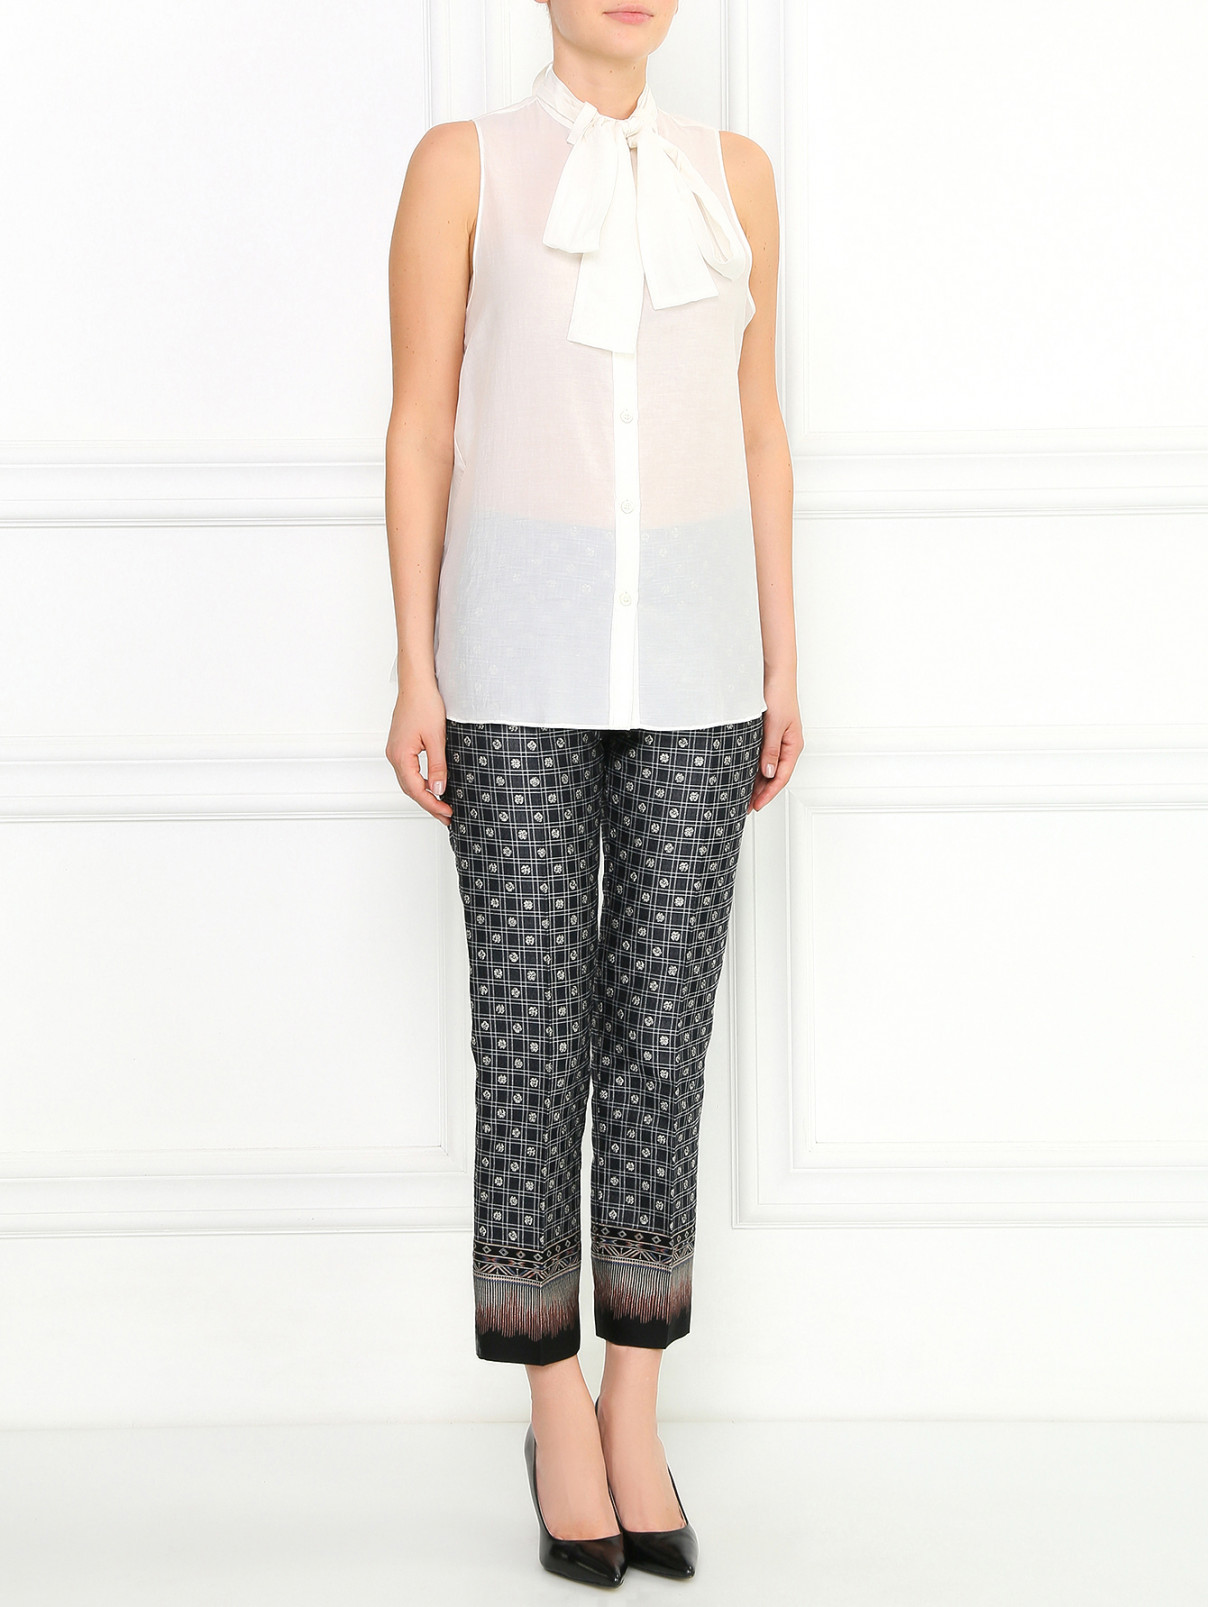 Блуза из хлопка и шелка с бантом Moschino Cheap&Chic  –  Модель Общий вид  – Цвет:  Белый